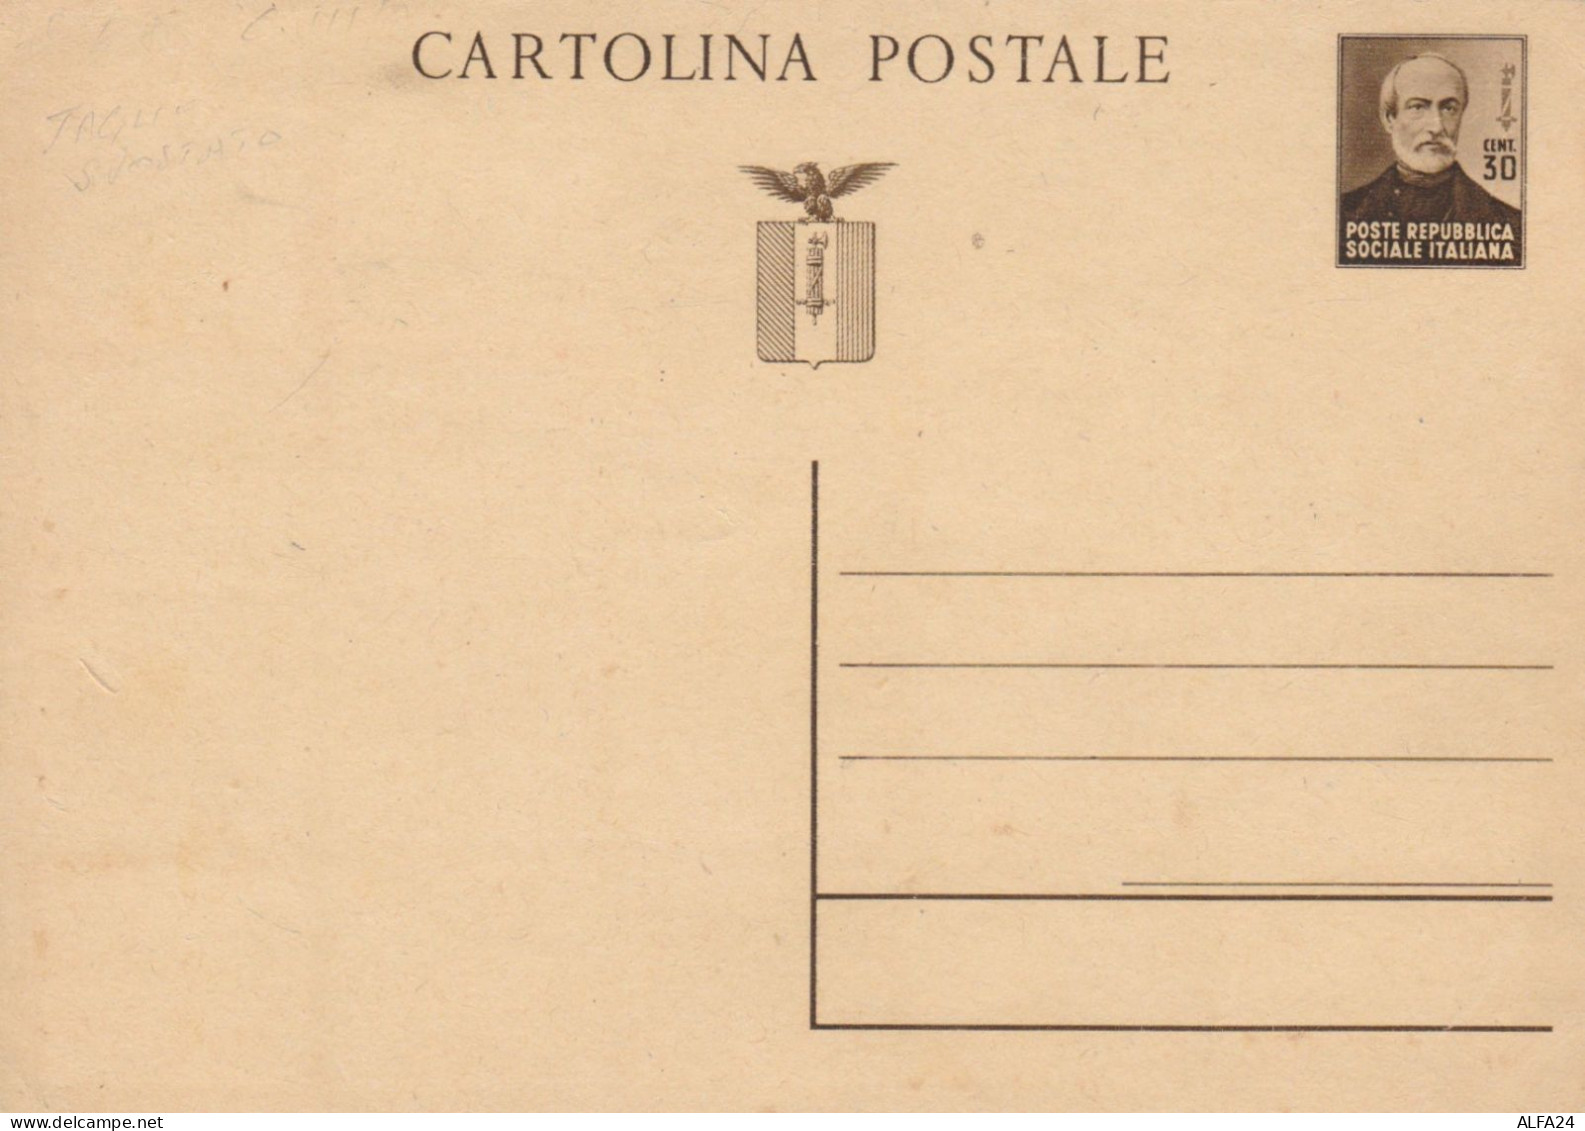 INTERO POSTALE C.30 RSI MAZZINI 1944-CAT.LASER 108 (HC96 - Stamped Stationery